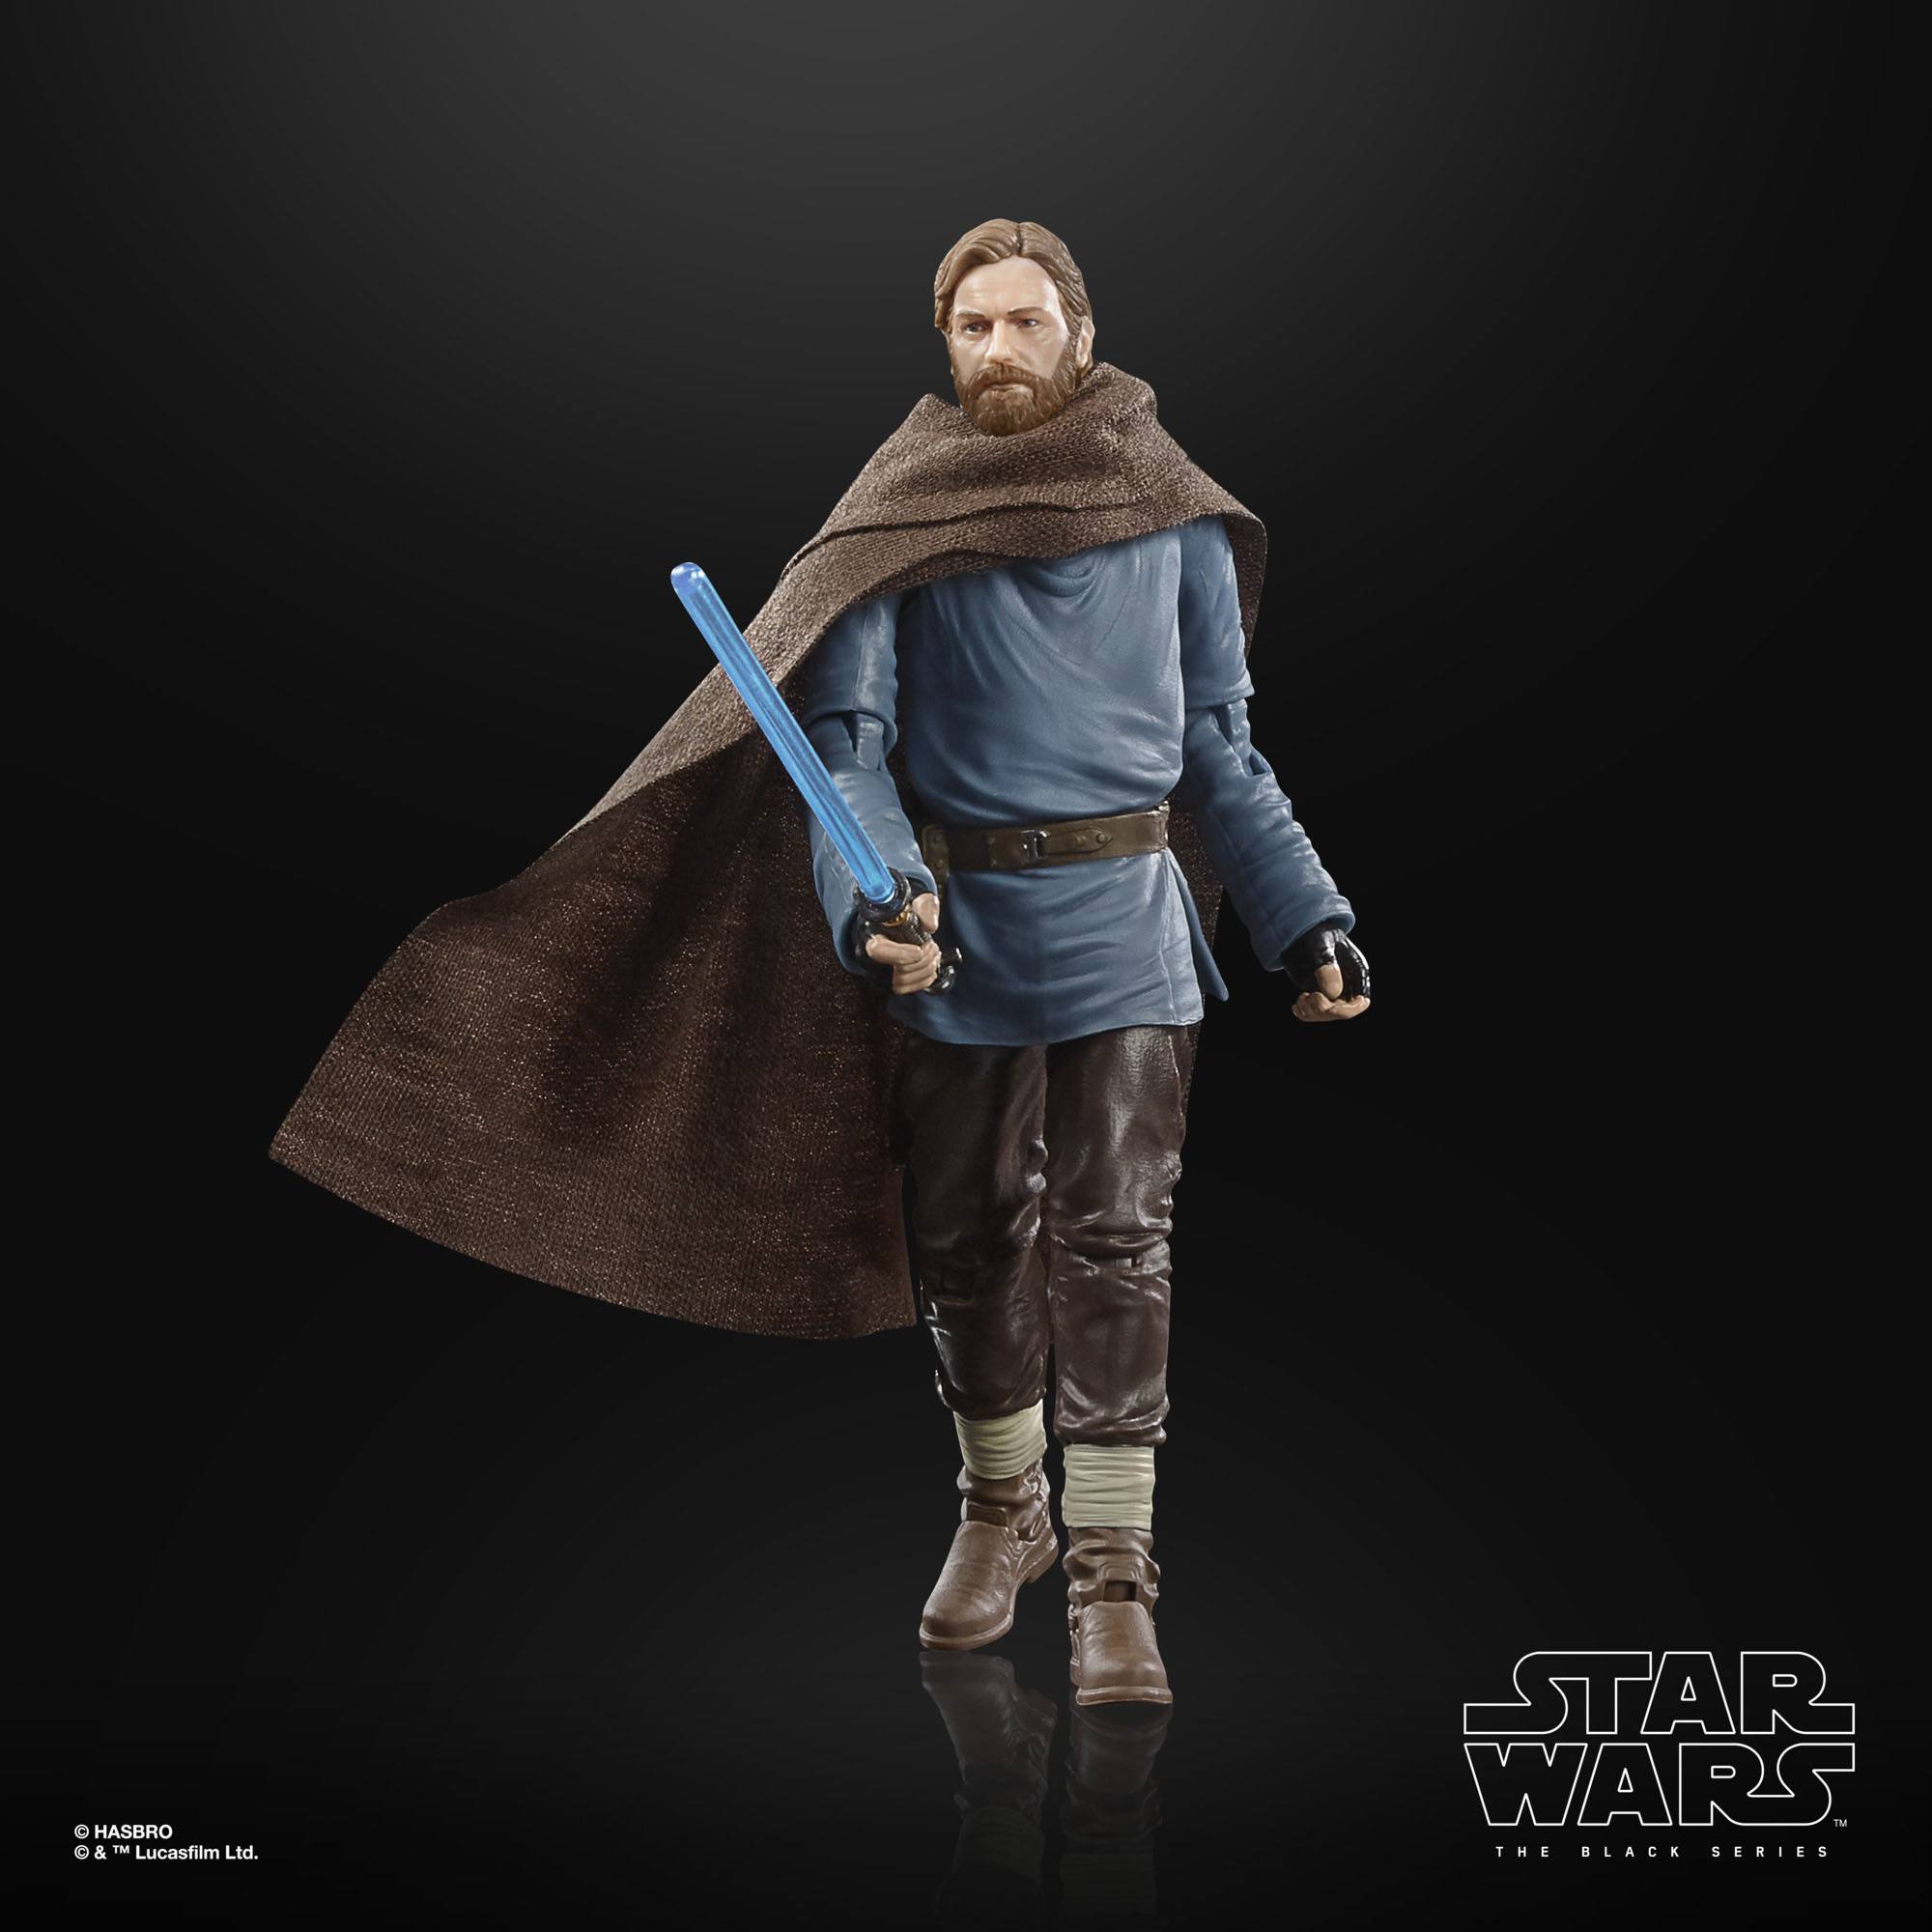 Star Wars: Obi-Wan Kenobi Black Series Actionfigur 2022 Ben Kenobi (Tibidon Station) 15 cm F56045L00 5010993968367